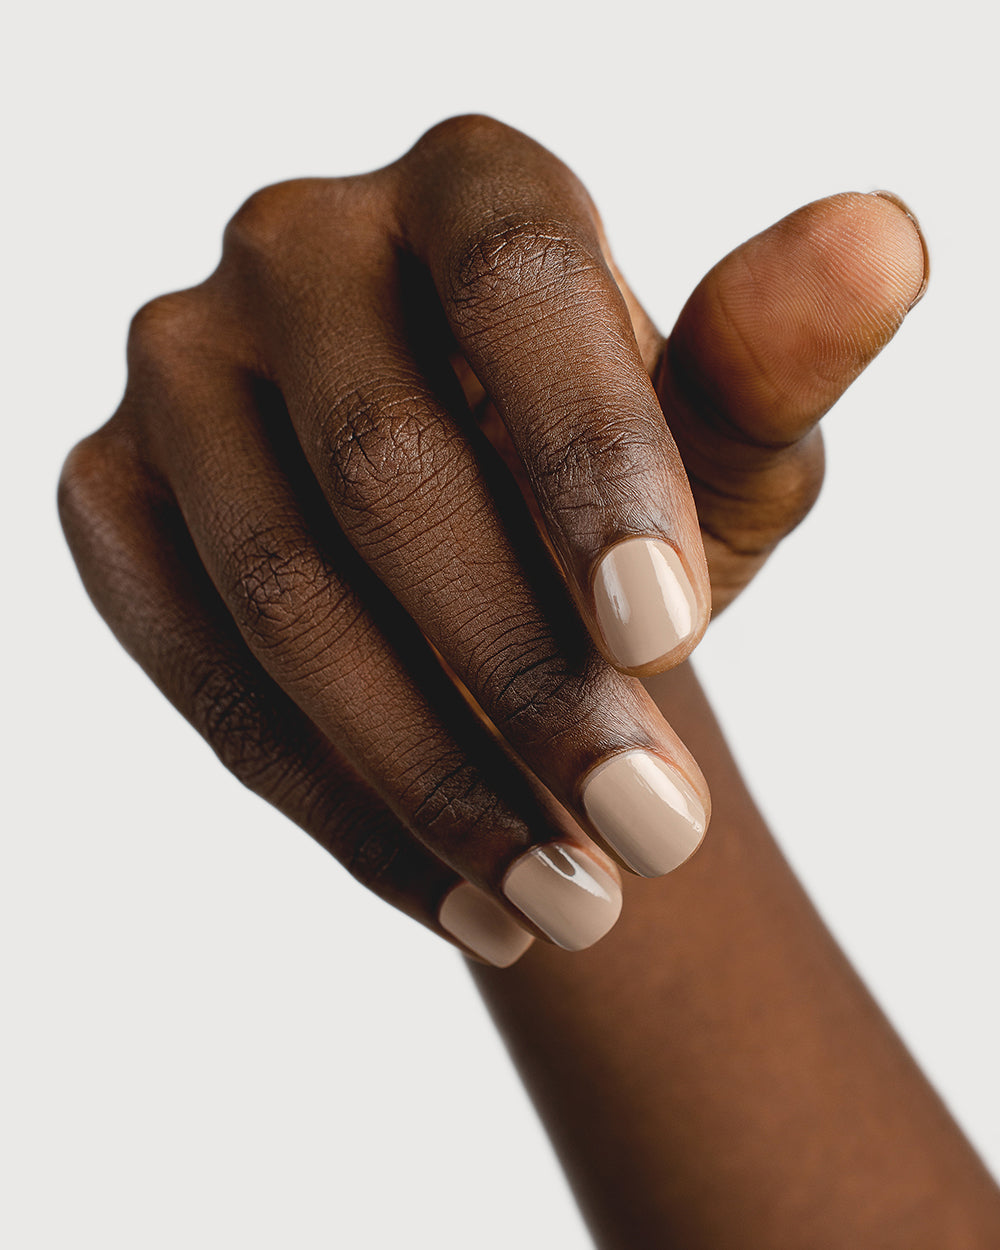 Warm clay nail polish hand swatch on dark skin tone